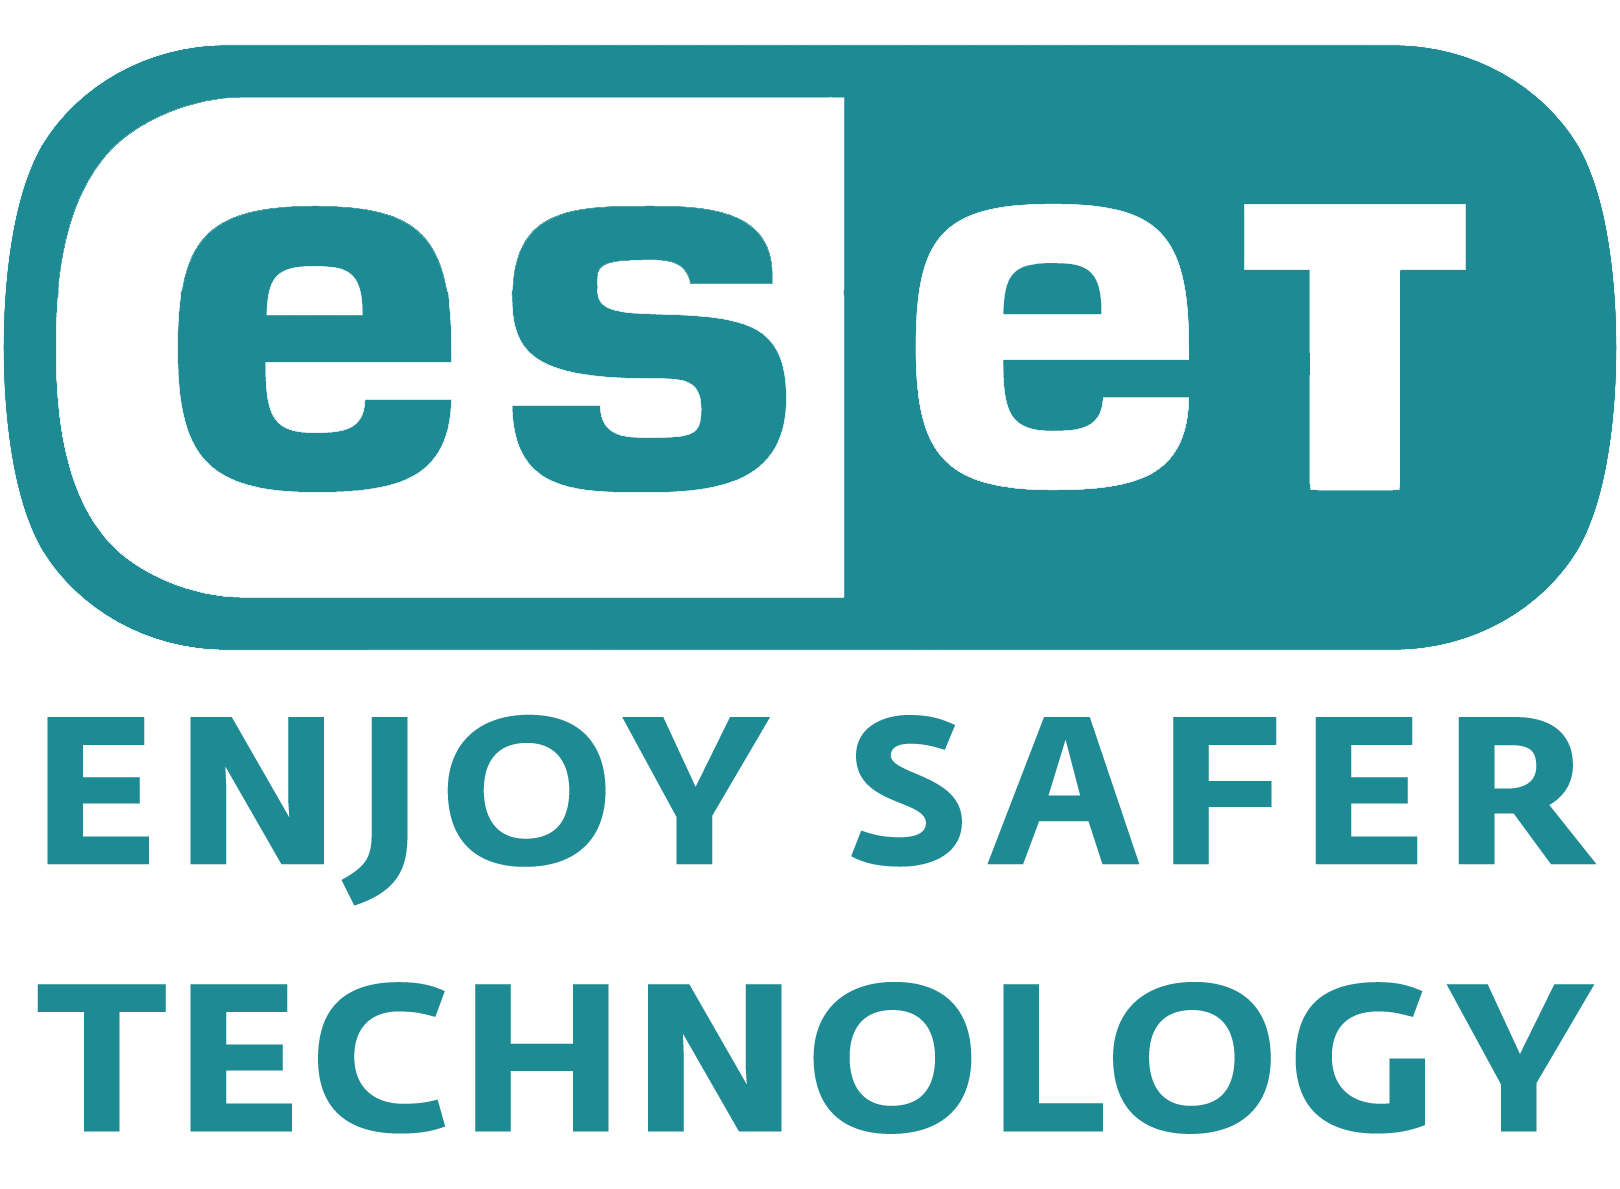 ESET enjoy safer technology logo